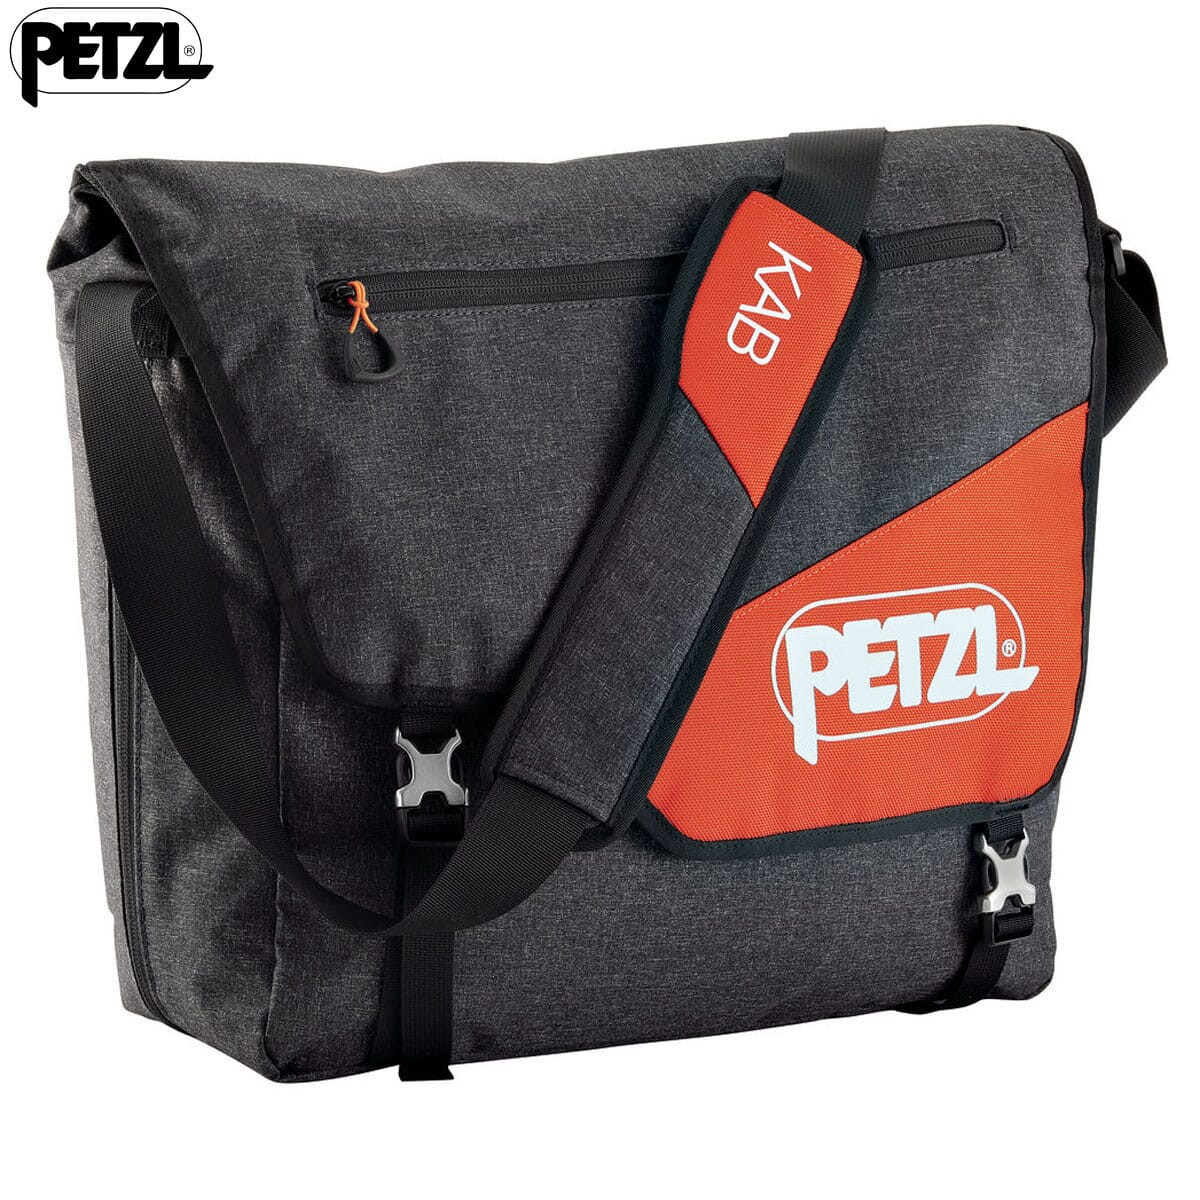 PETZL Kab Rope Bag for Gym Climbing